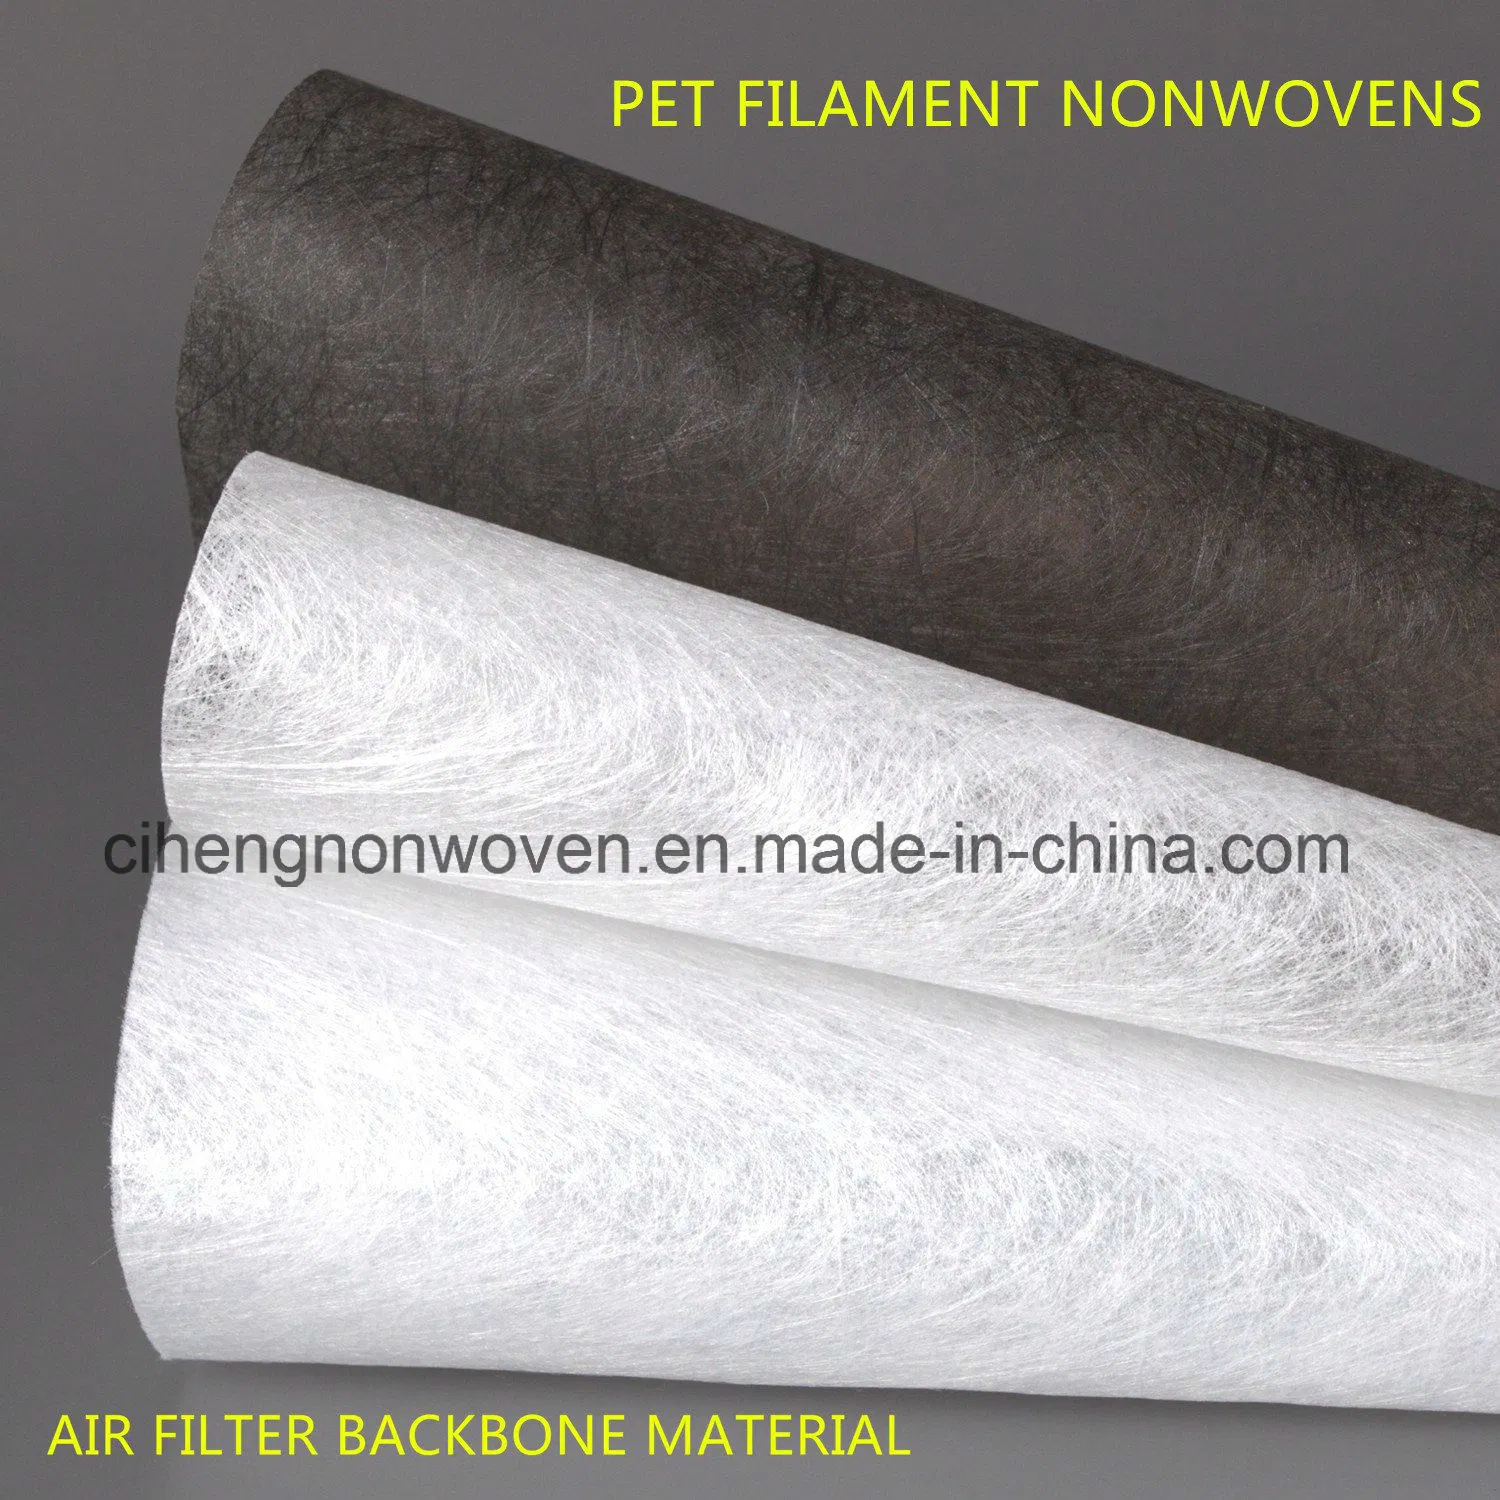 Filter Media Polyester Backbone Material Pet Filament Nonwoven Fabric